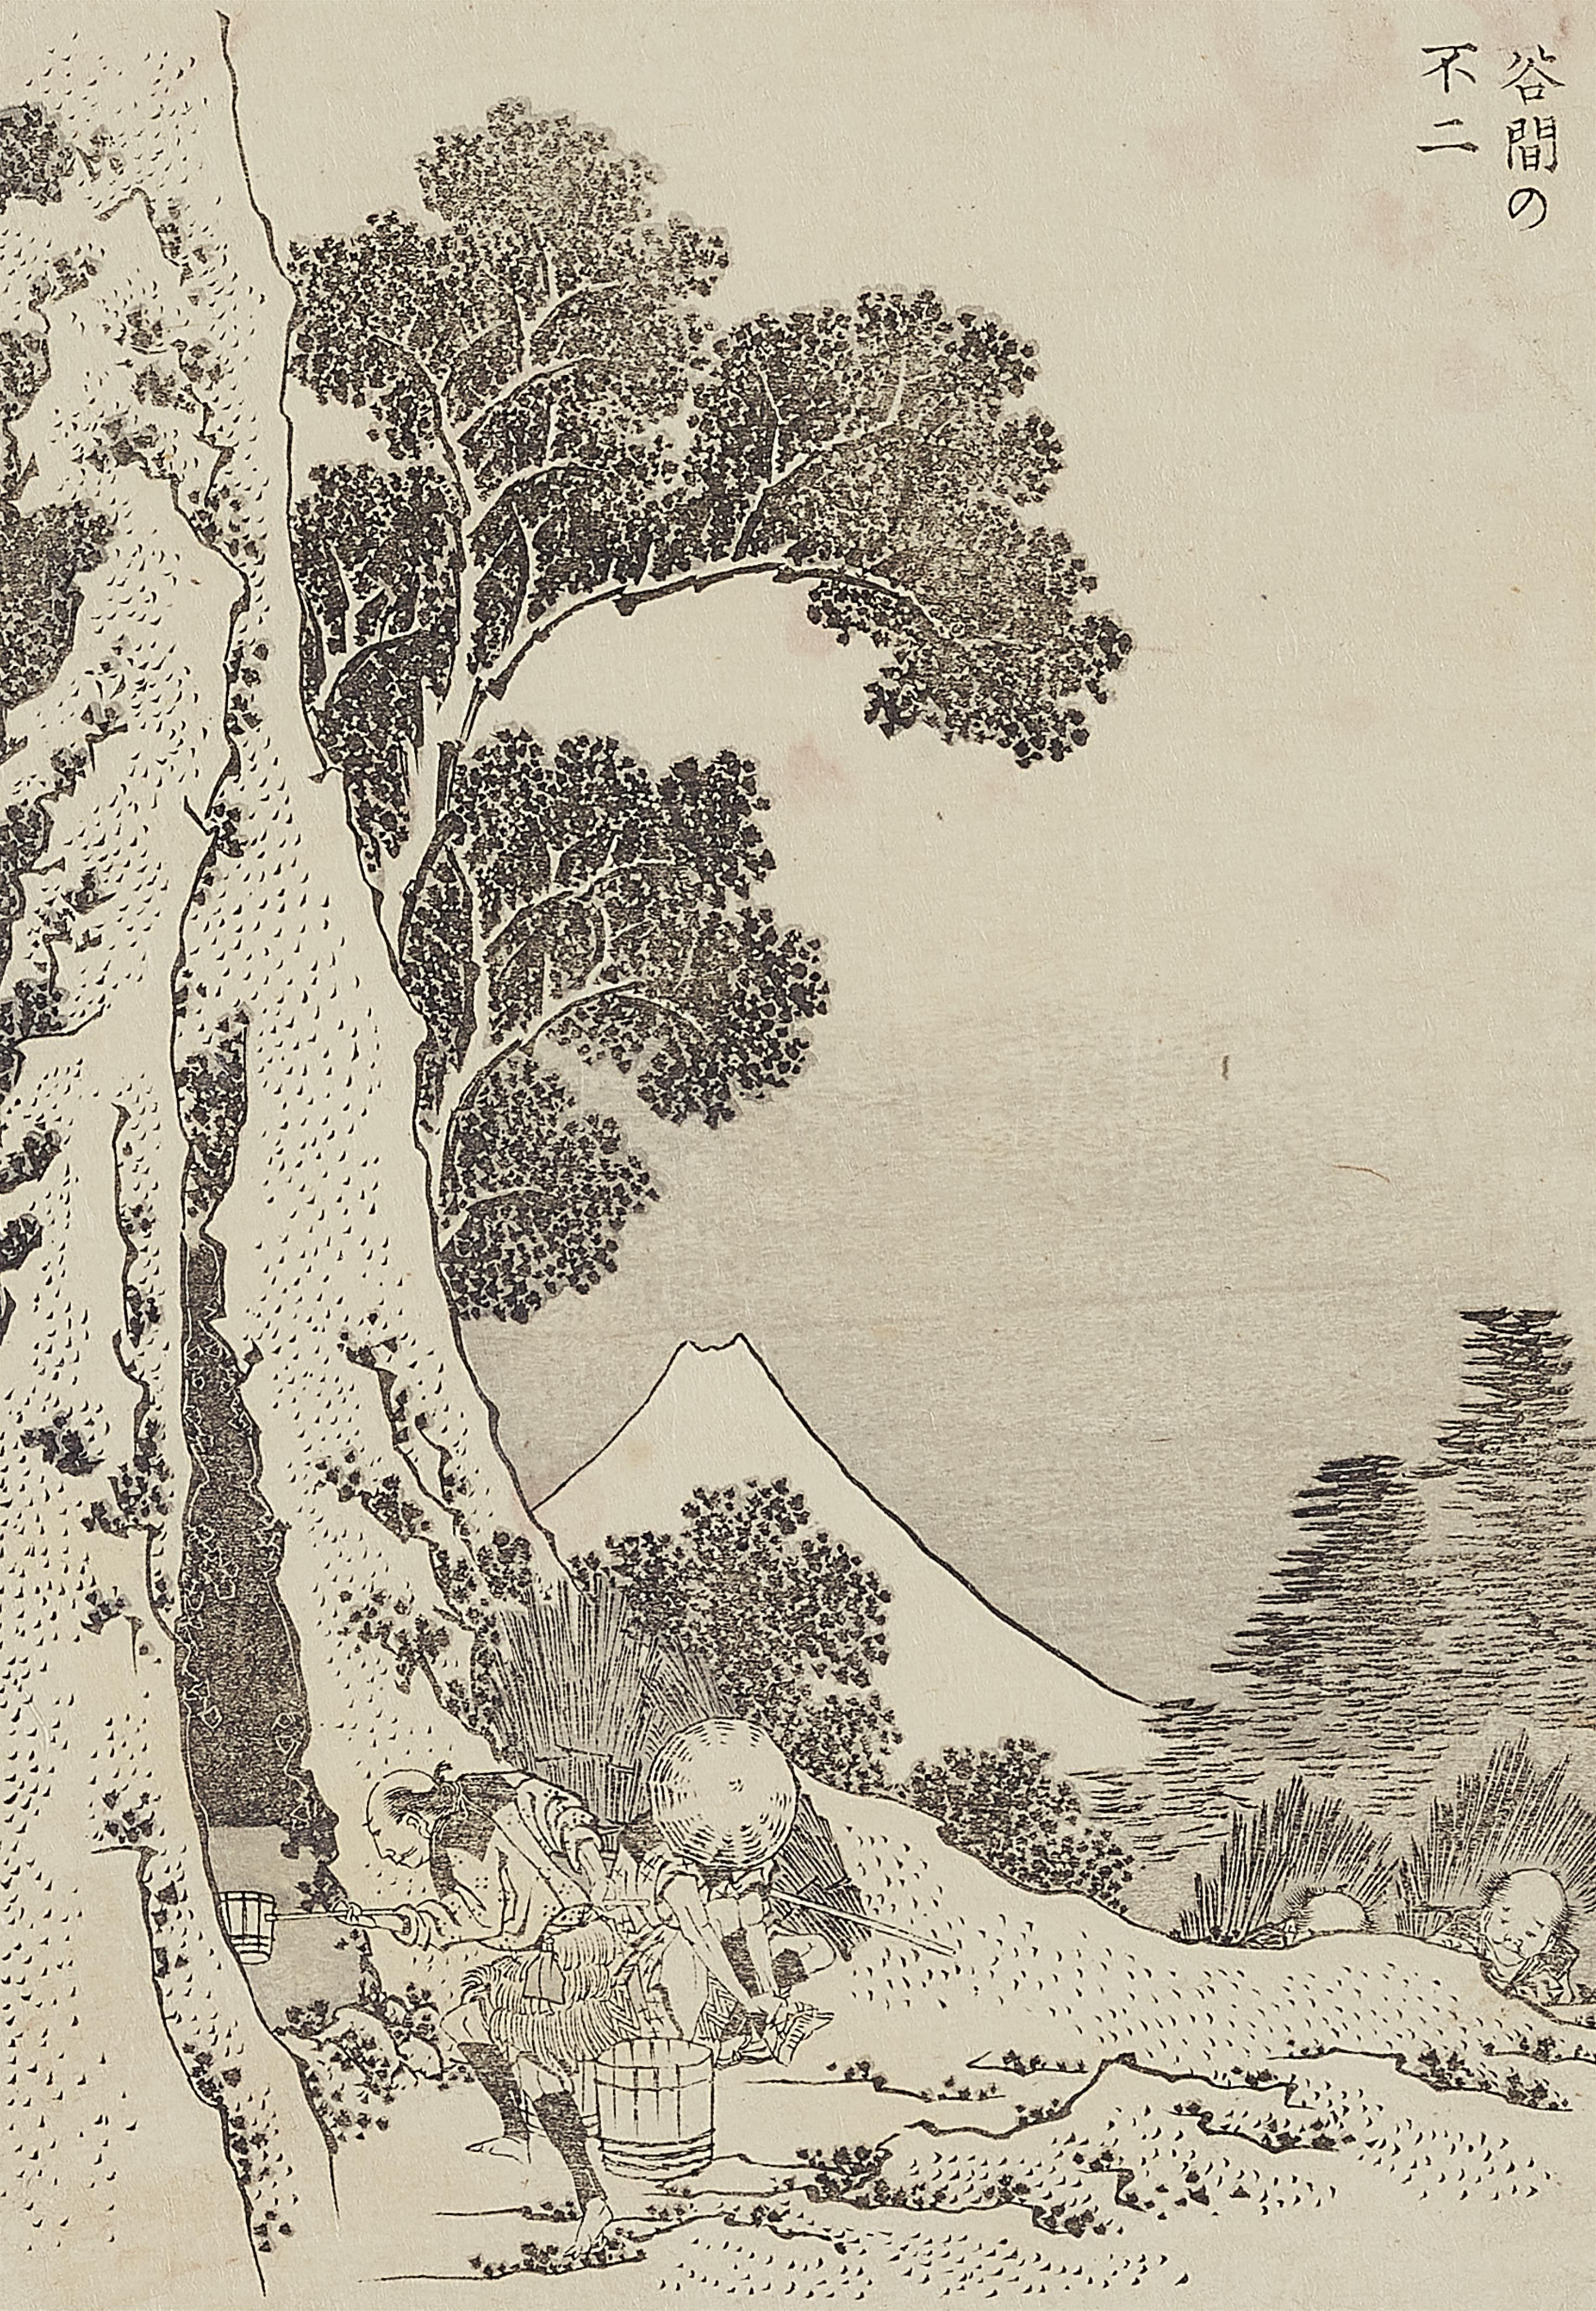 Katsushika Hokusai - Black and white illustrations from the album Fugaku hyakkei - image-38